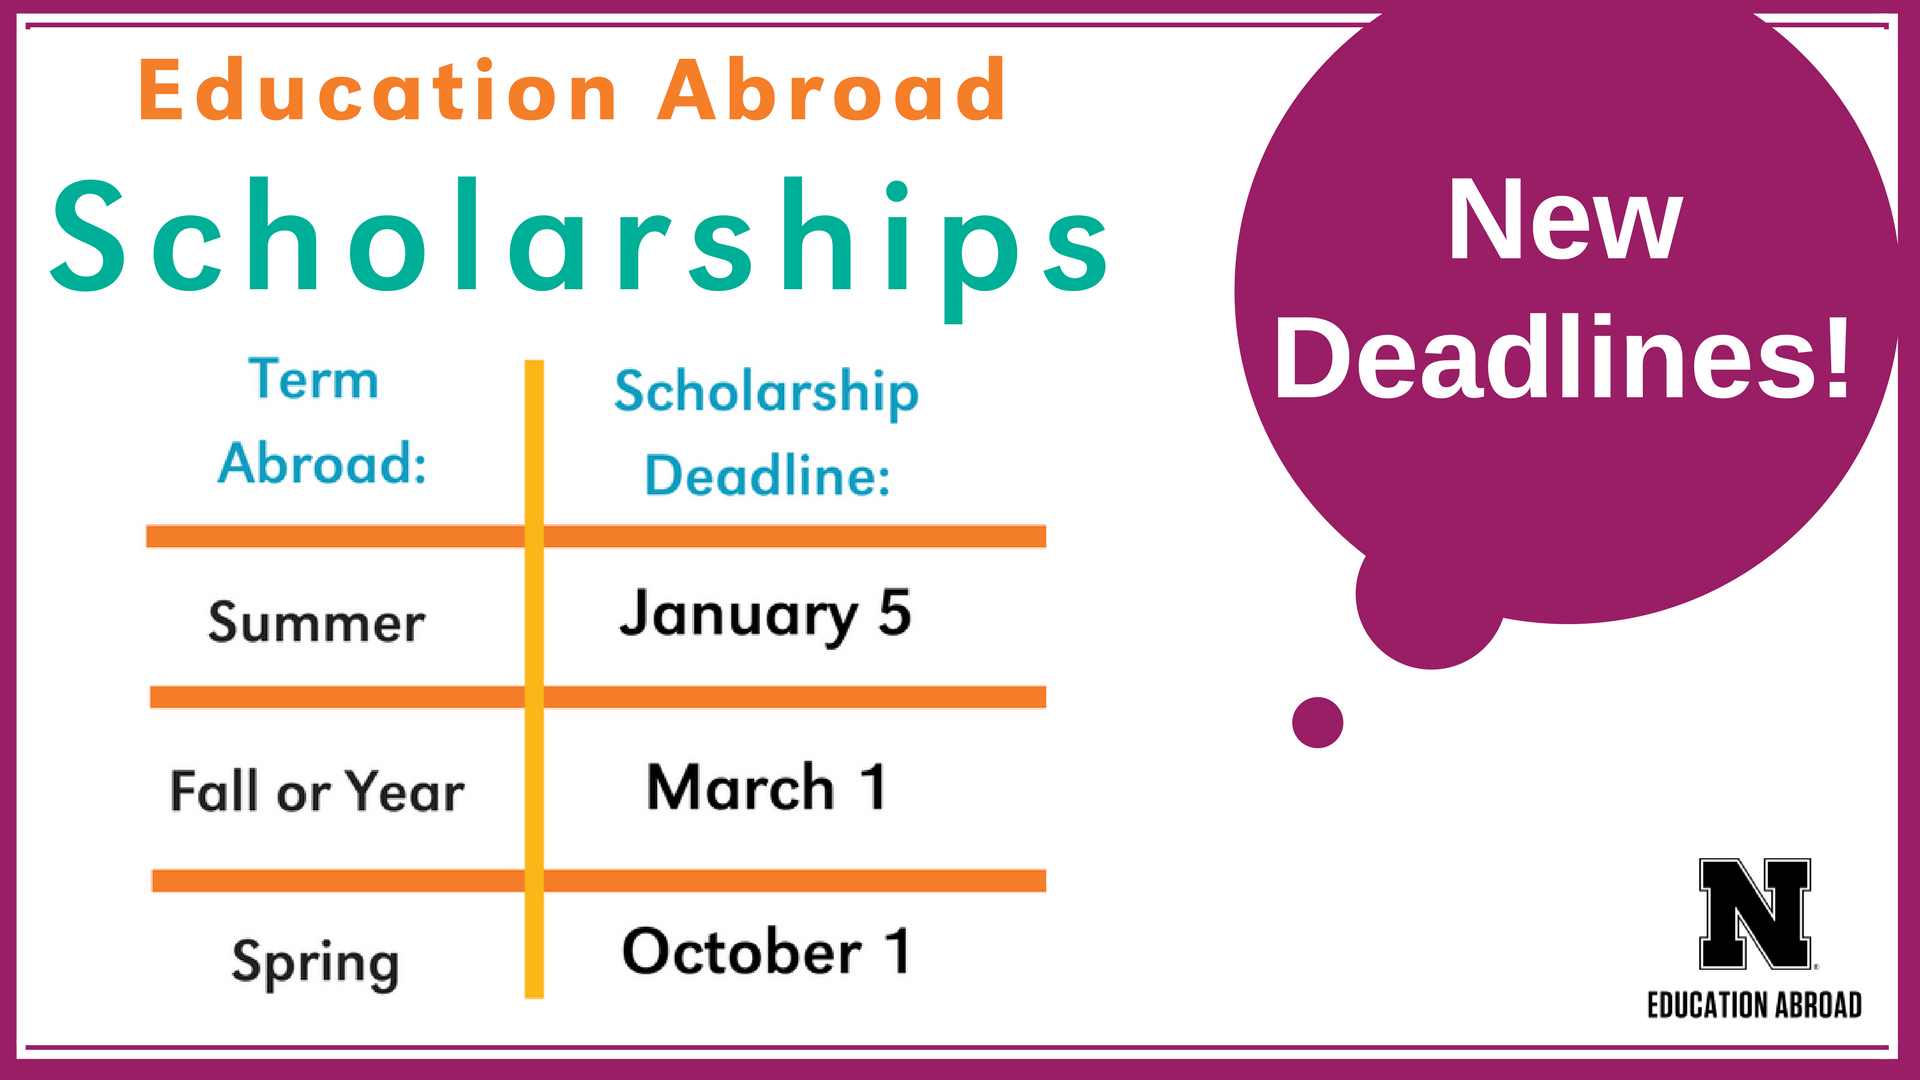 Education Abroad Scholarship Deadlines